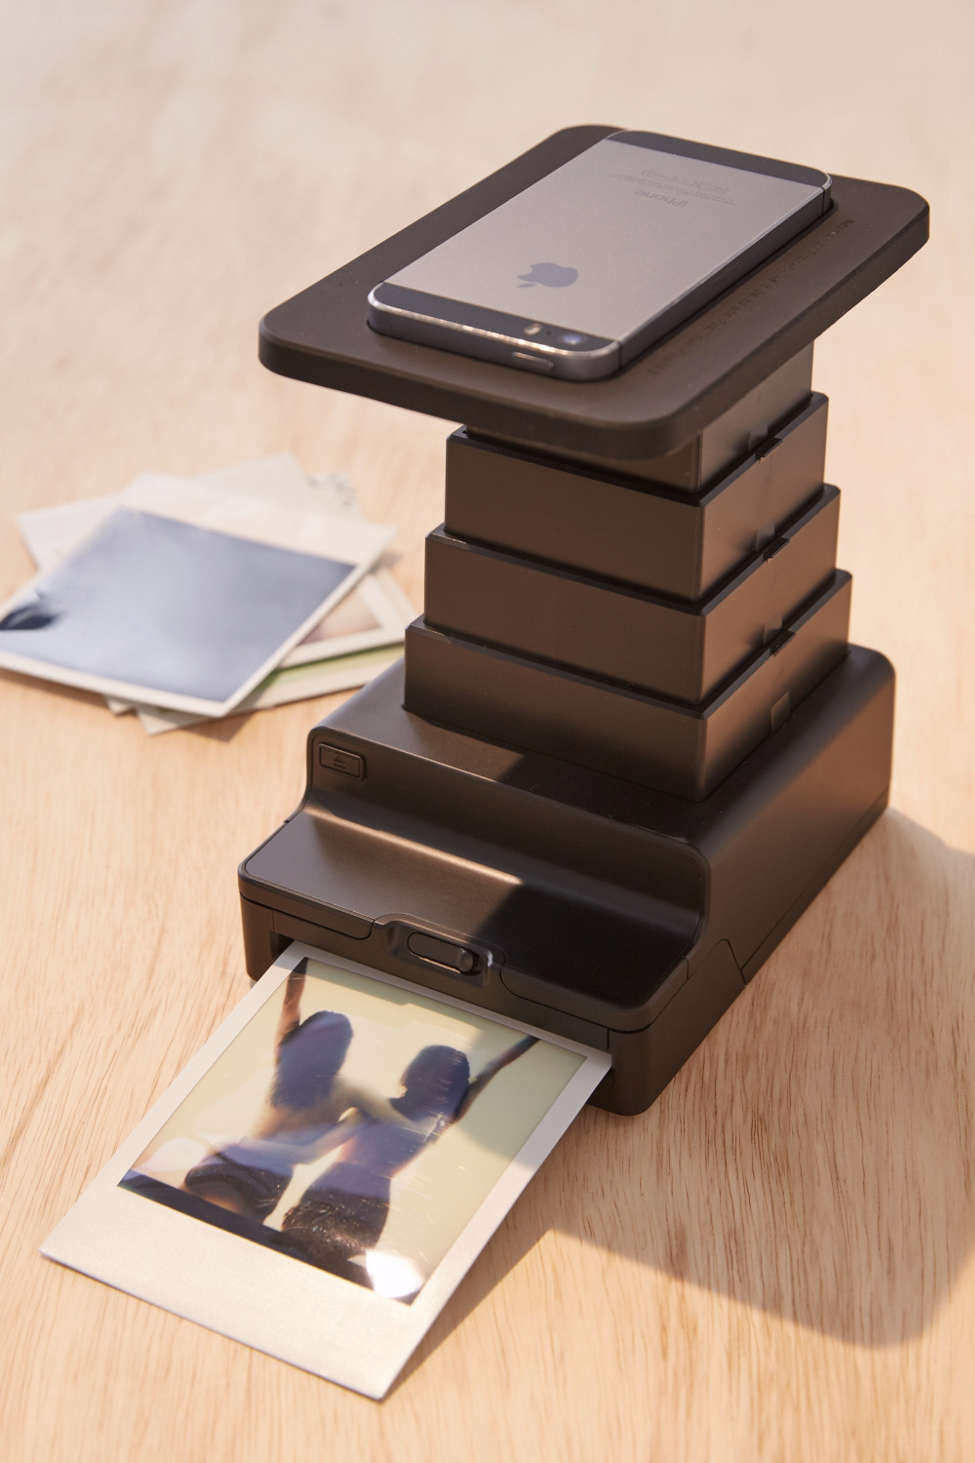 Transform any digital image into a Polaroid type printout!